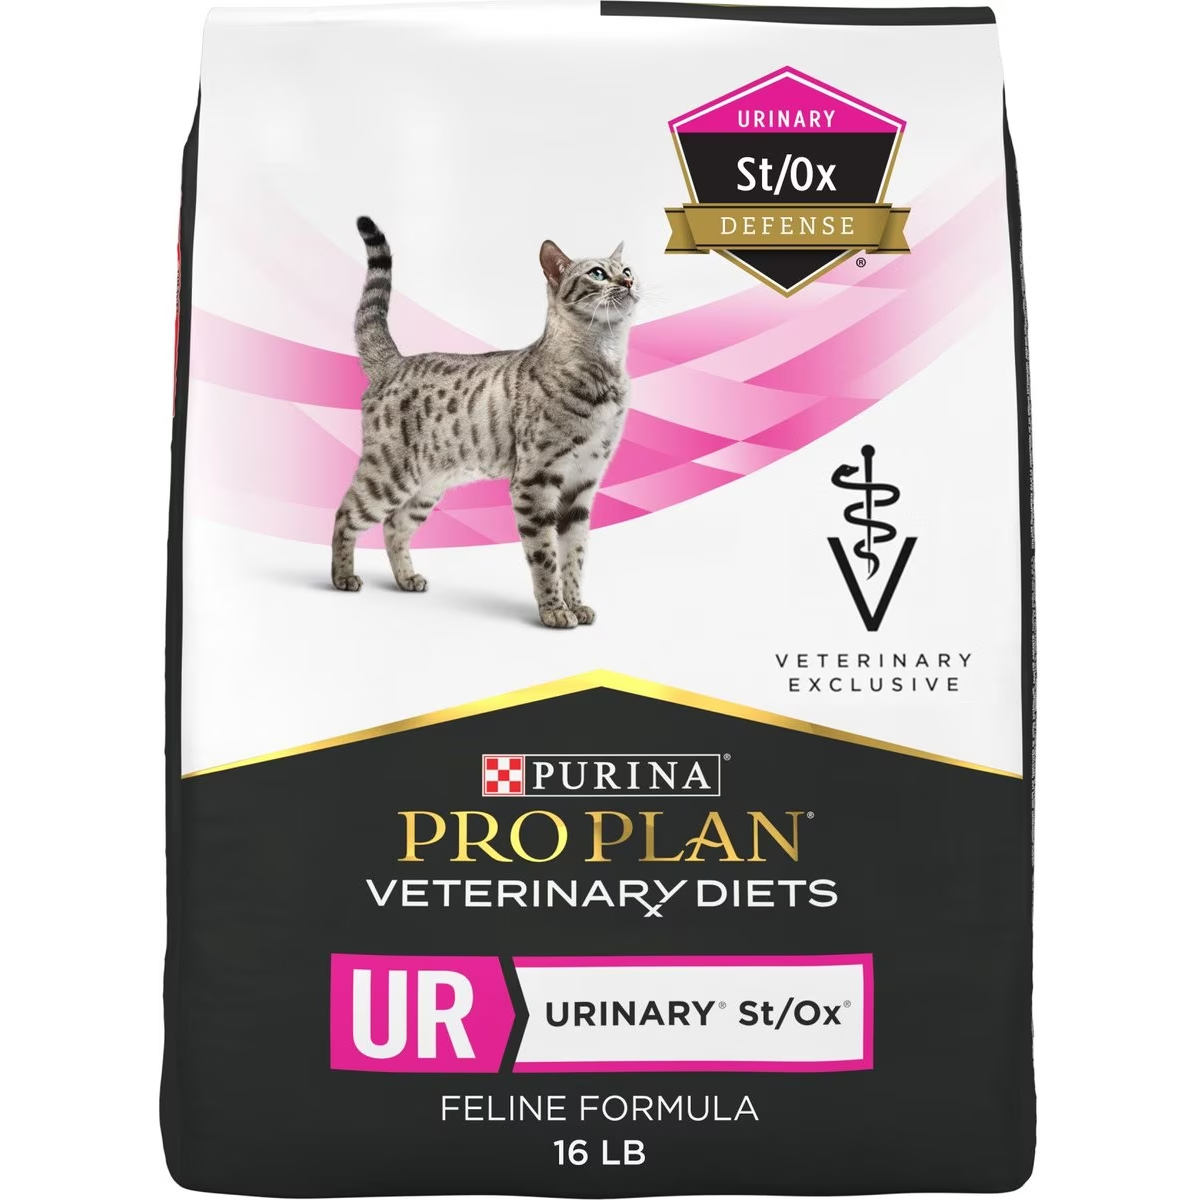 Purina Pro Plan Veterinary Diets Urinary Formula Dry Cat Food